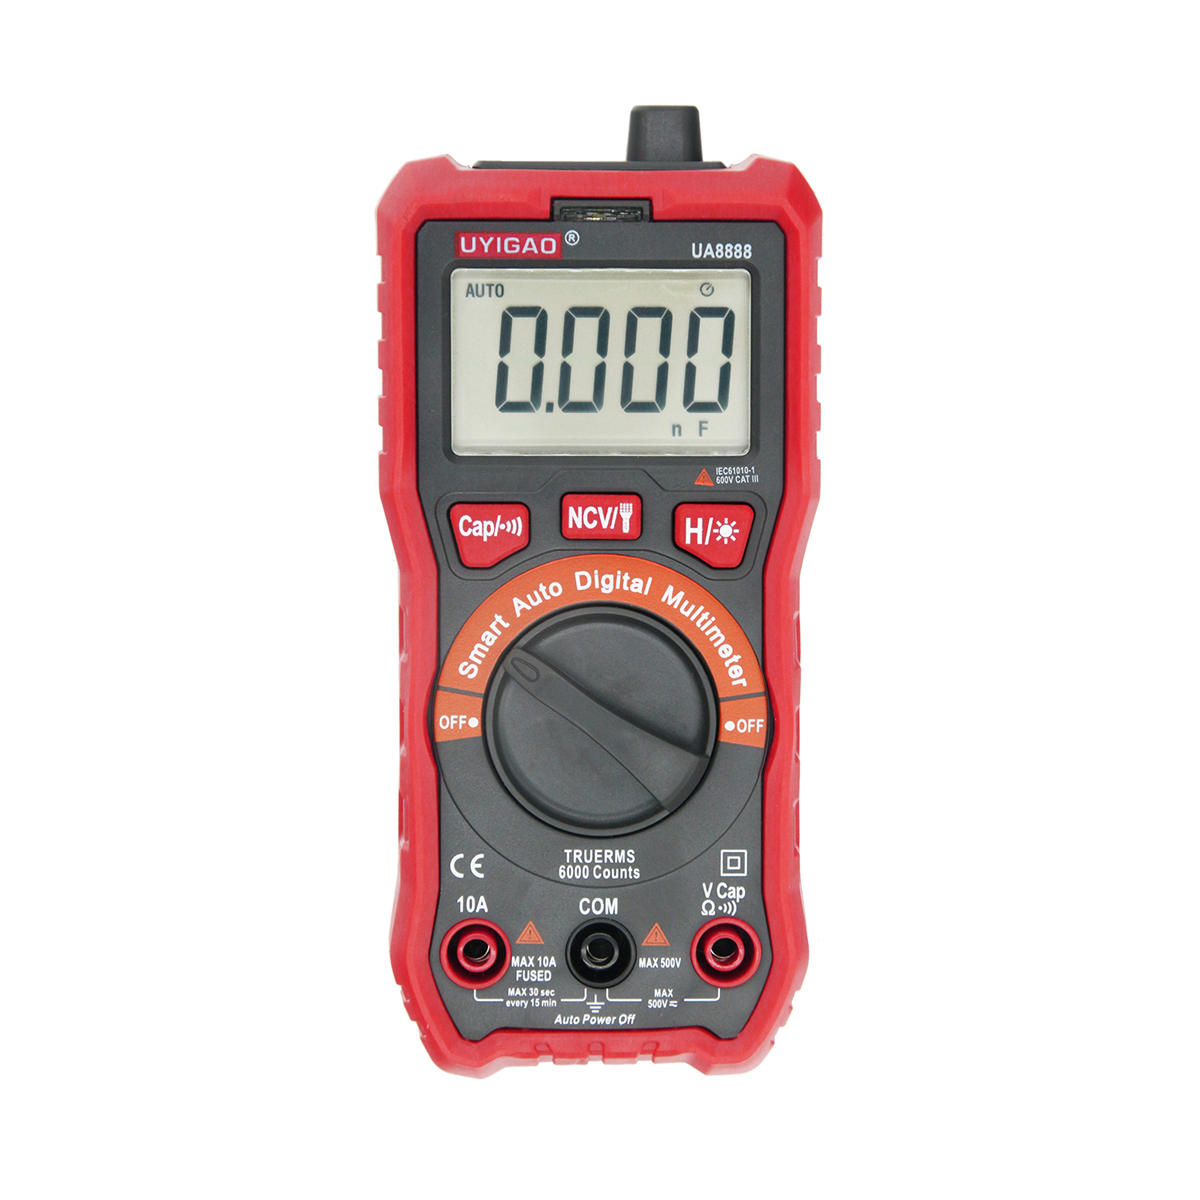 unicao ua888 digitale auto meter multimeter handheld tester ac / dc / resistanc / ncv